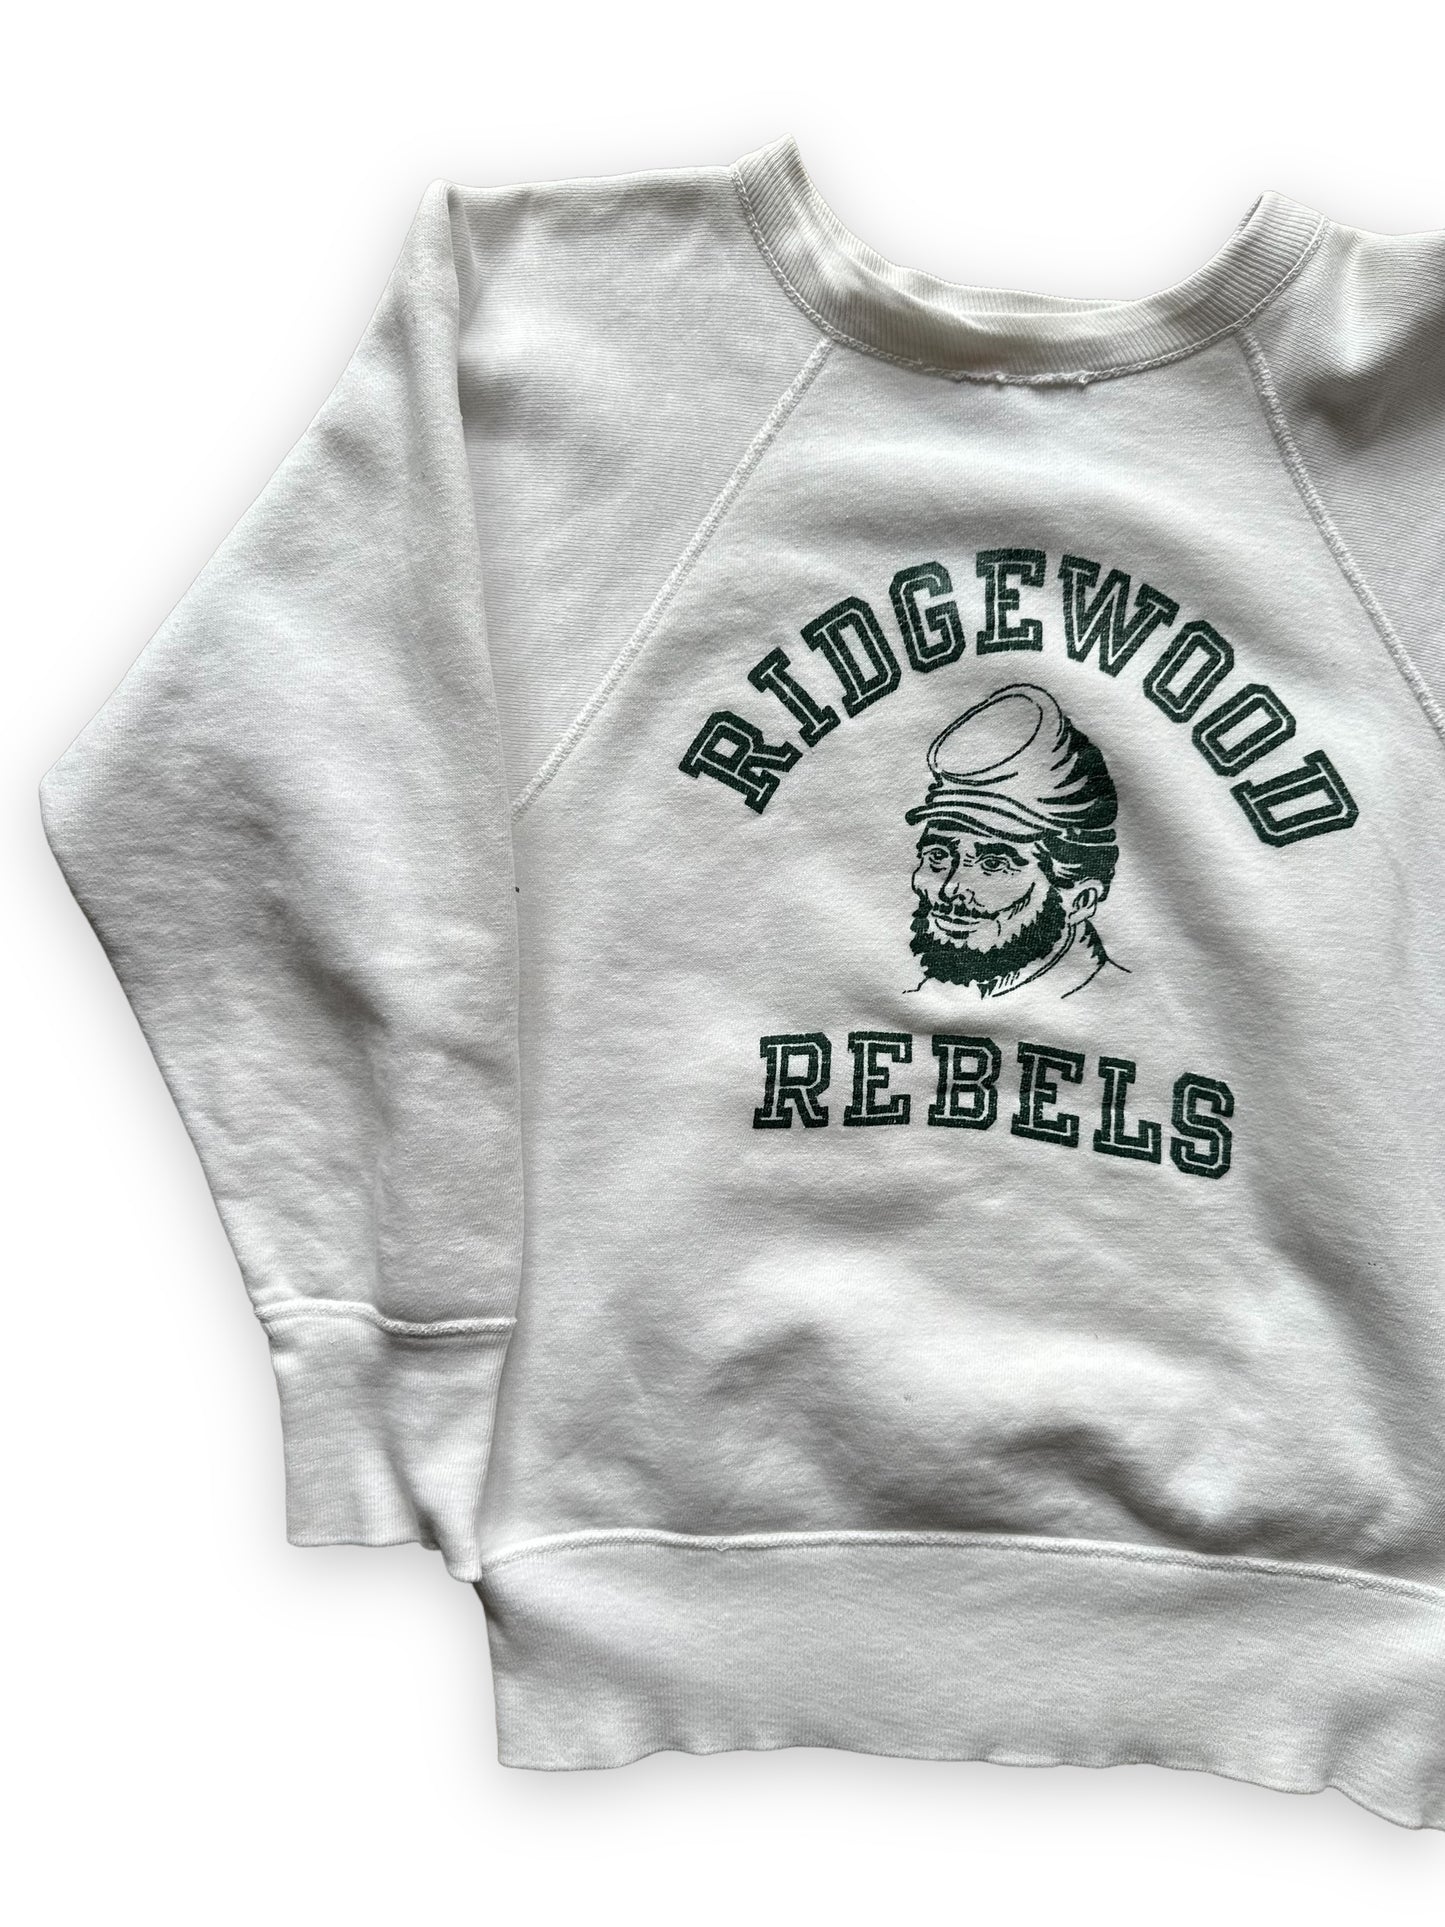 Right Front View on Vintage Champion Running Man Ridgewood Rebels Crewneck Sweatshirt | Vintage Champion Sweatshirt Seattle | Barn Owl Vintage Clothing